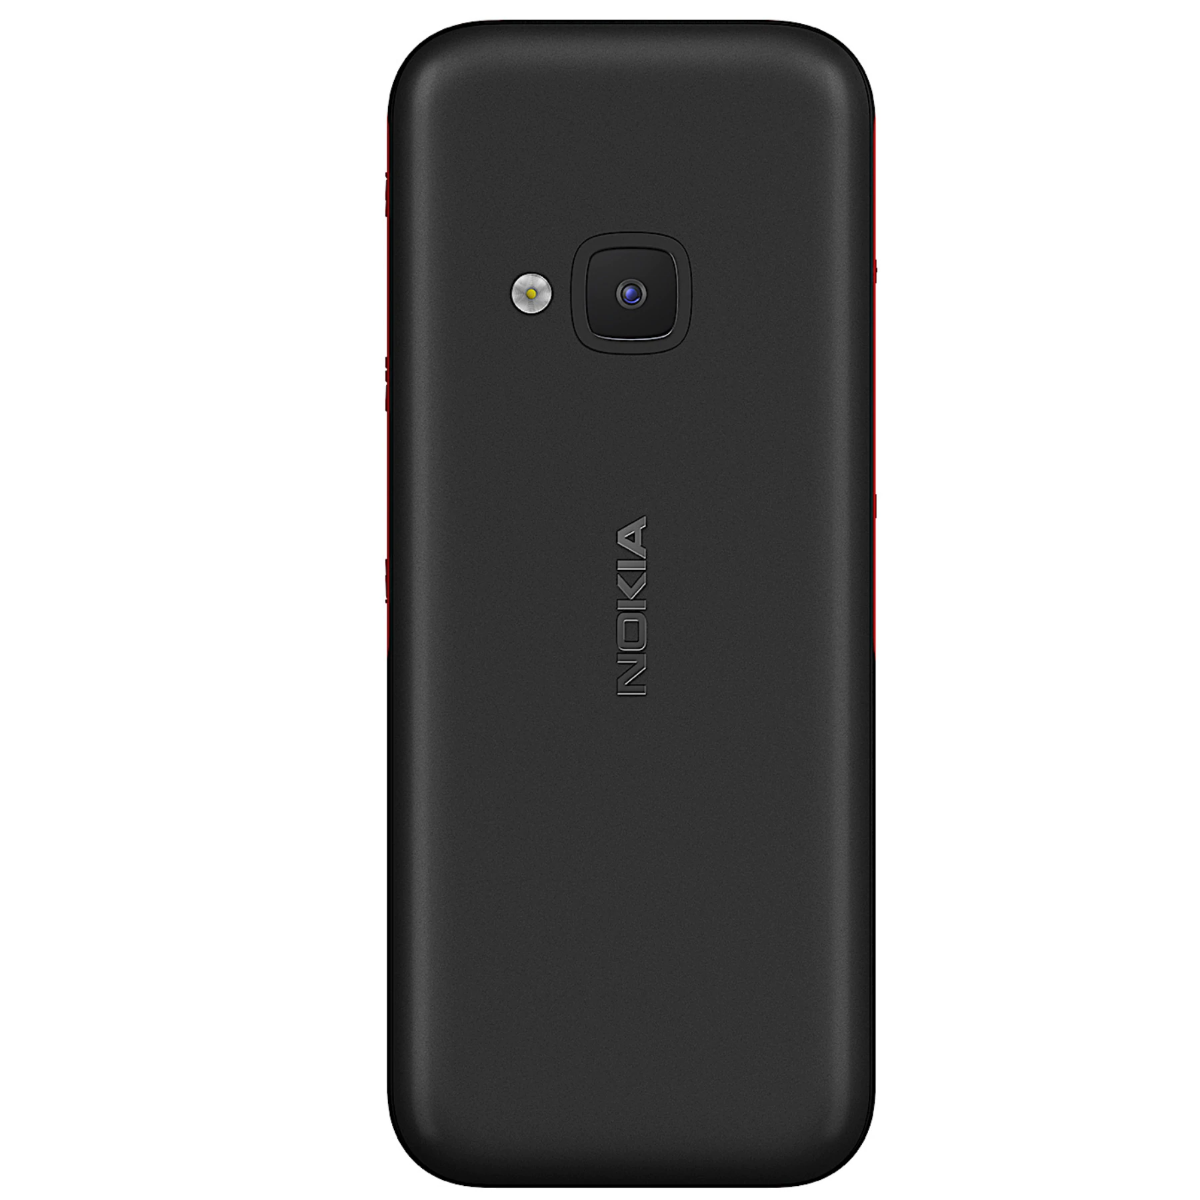 Telefon mobil Nokia 5310 (2020), Dual SIM, Black/Red